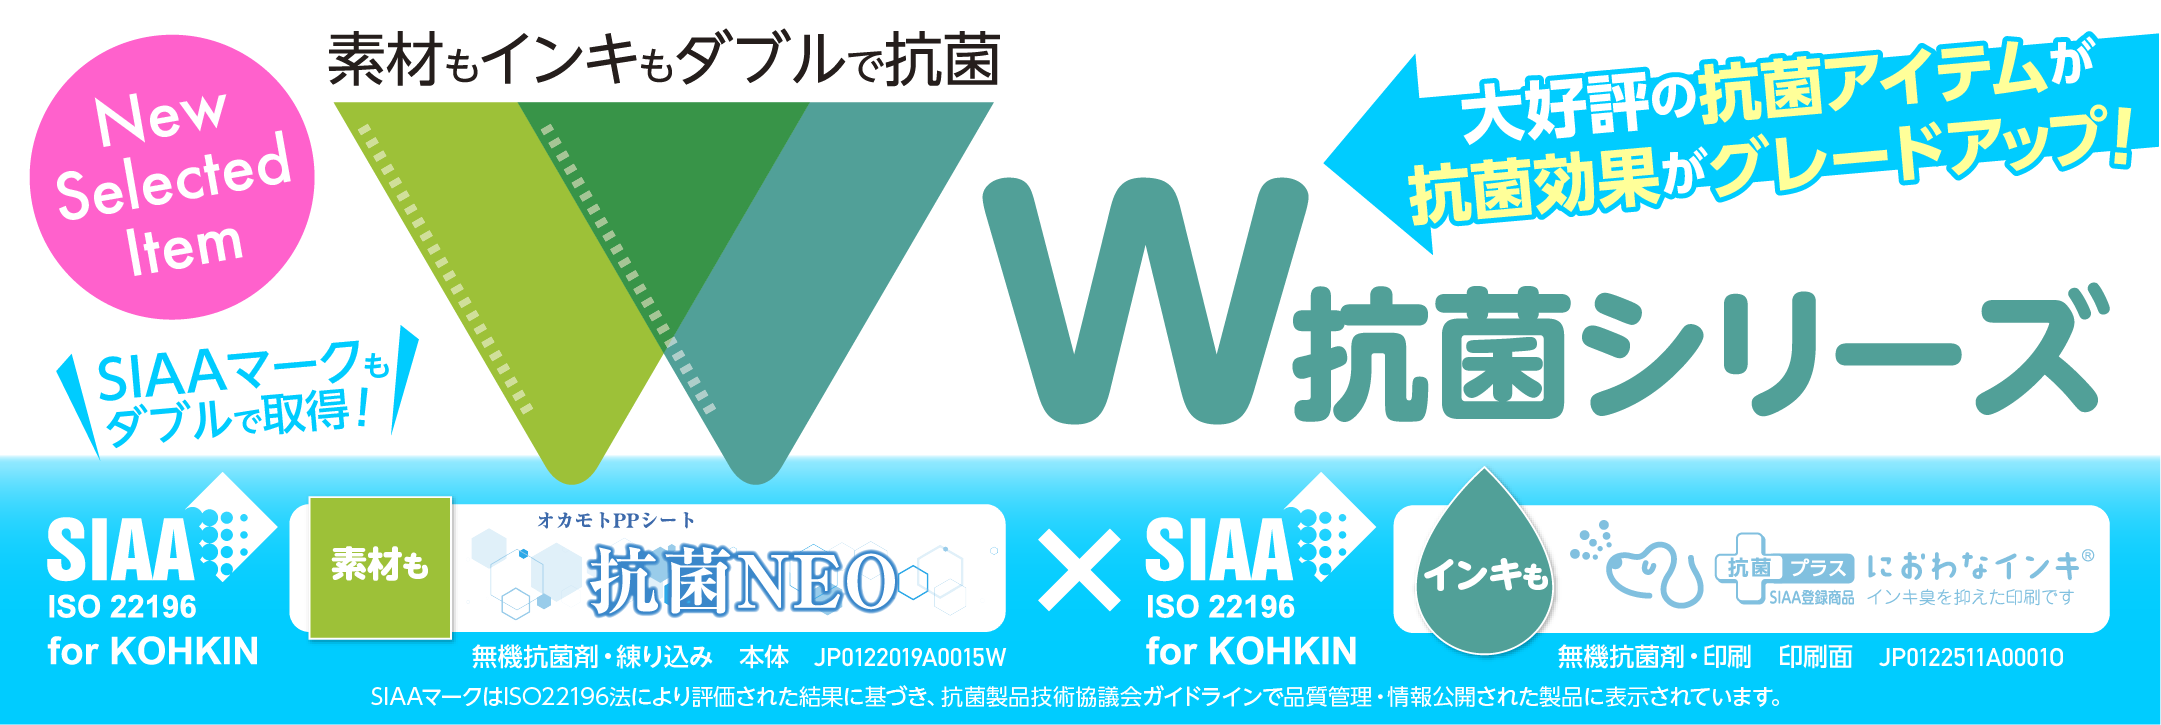 Wkohkin_logo